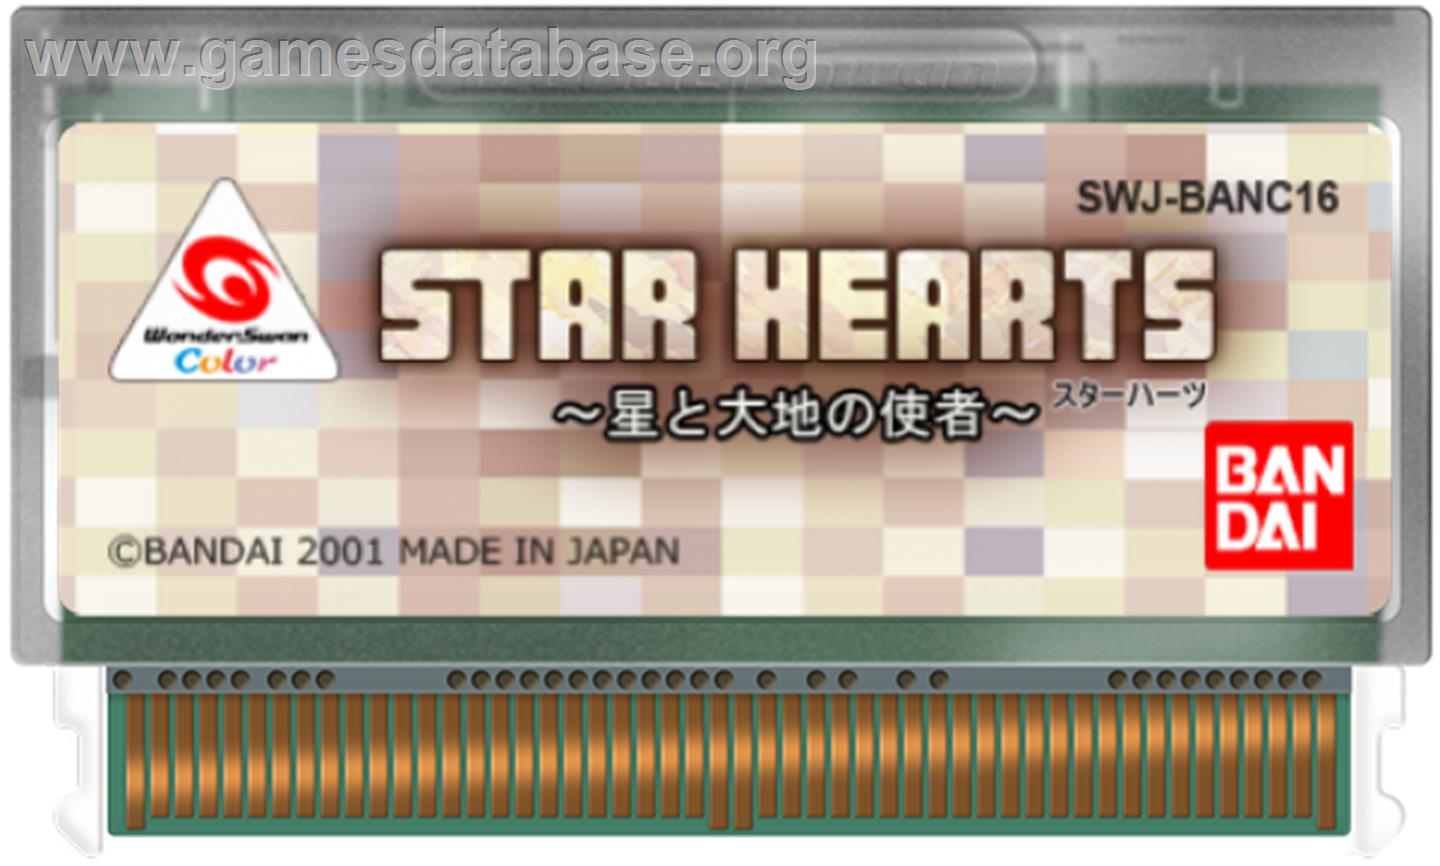 Star Hearts: Hoshi to Daichi no Shisha - Bandai WonderSwan Color - Artwork - Cartridge